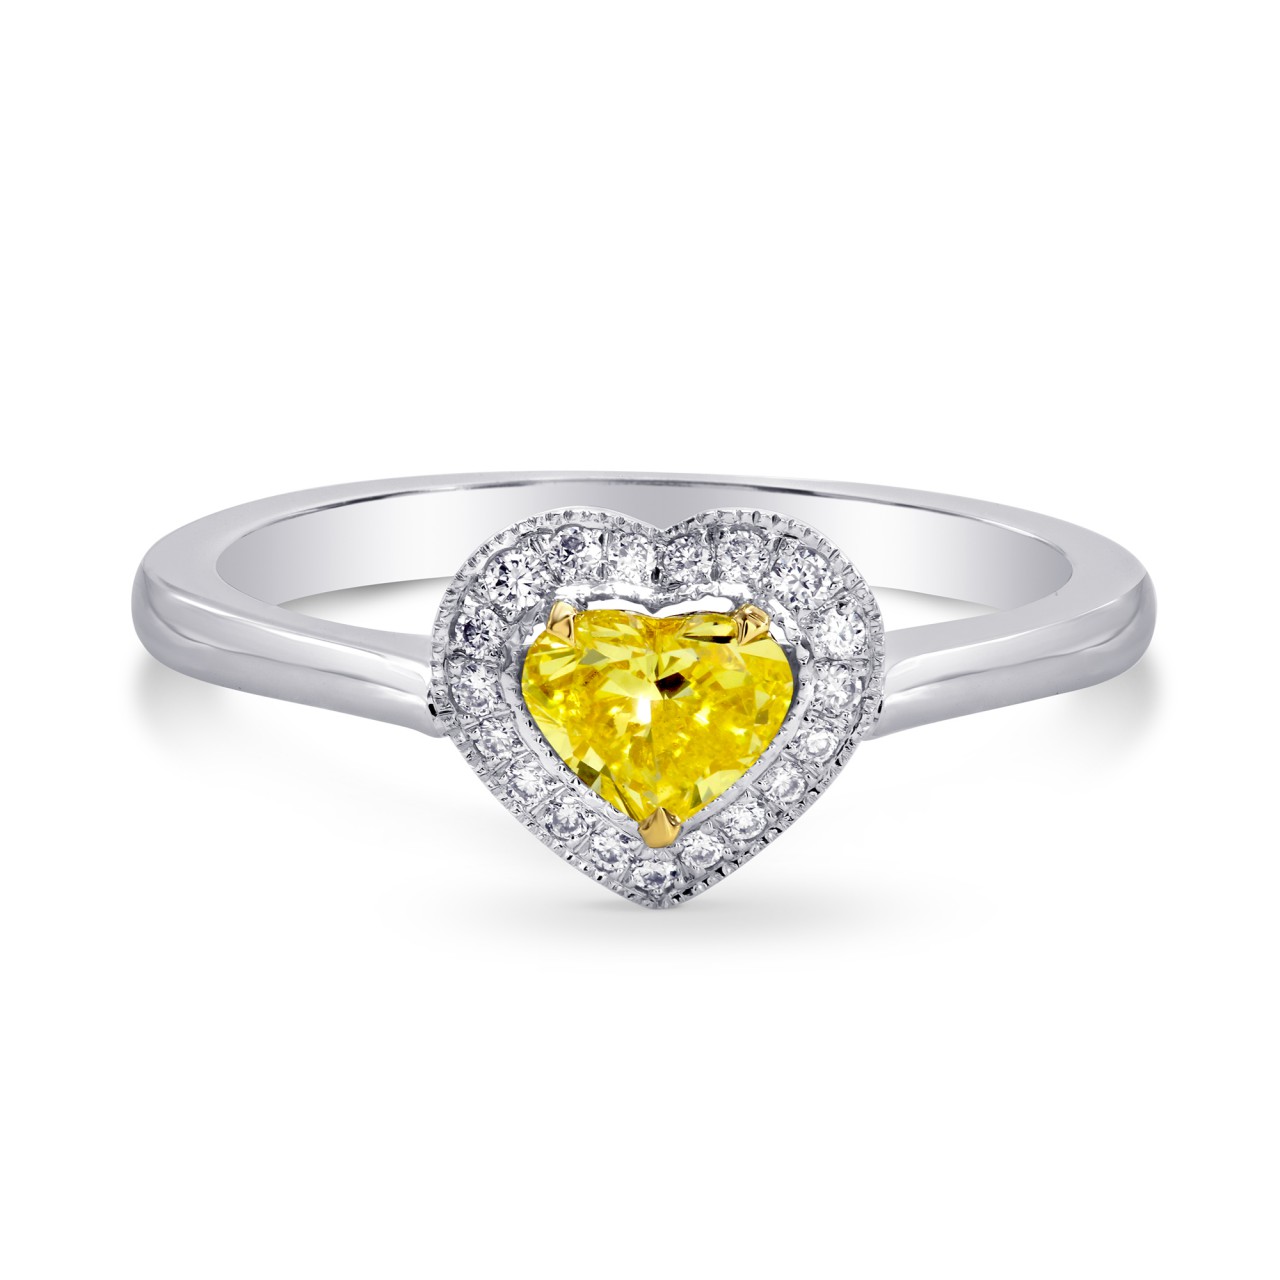 Colorless Round Brilliant Diamond Halo Ring, SKU 28087R (0.88Ct TW)